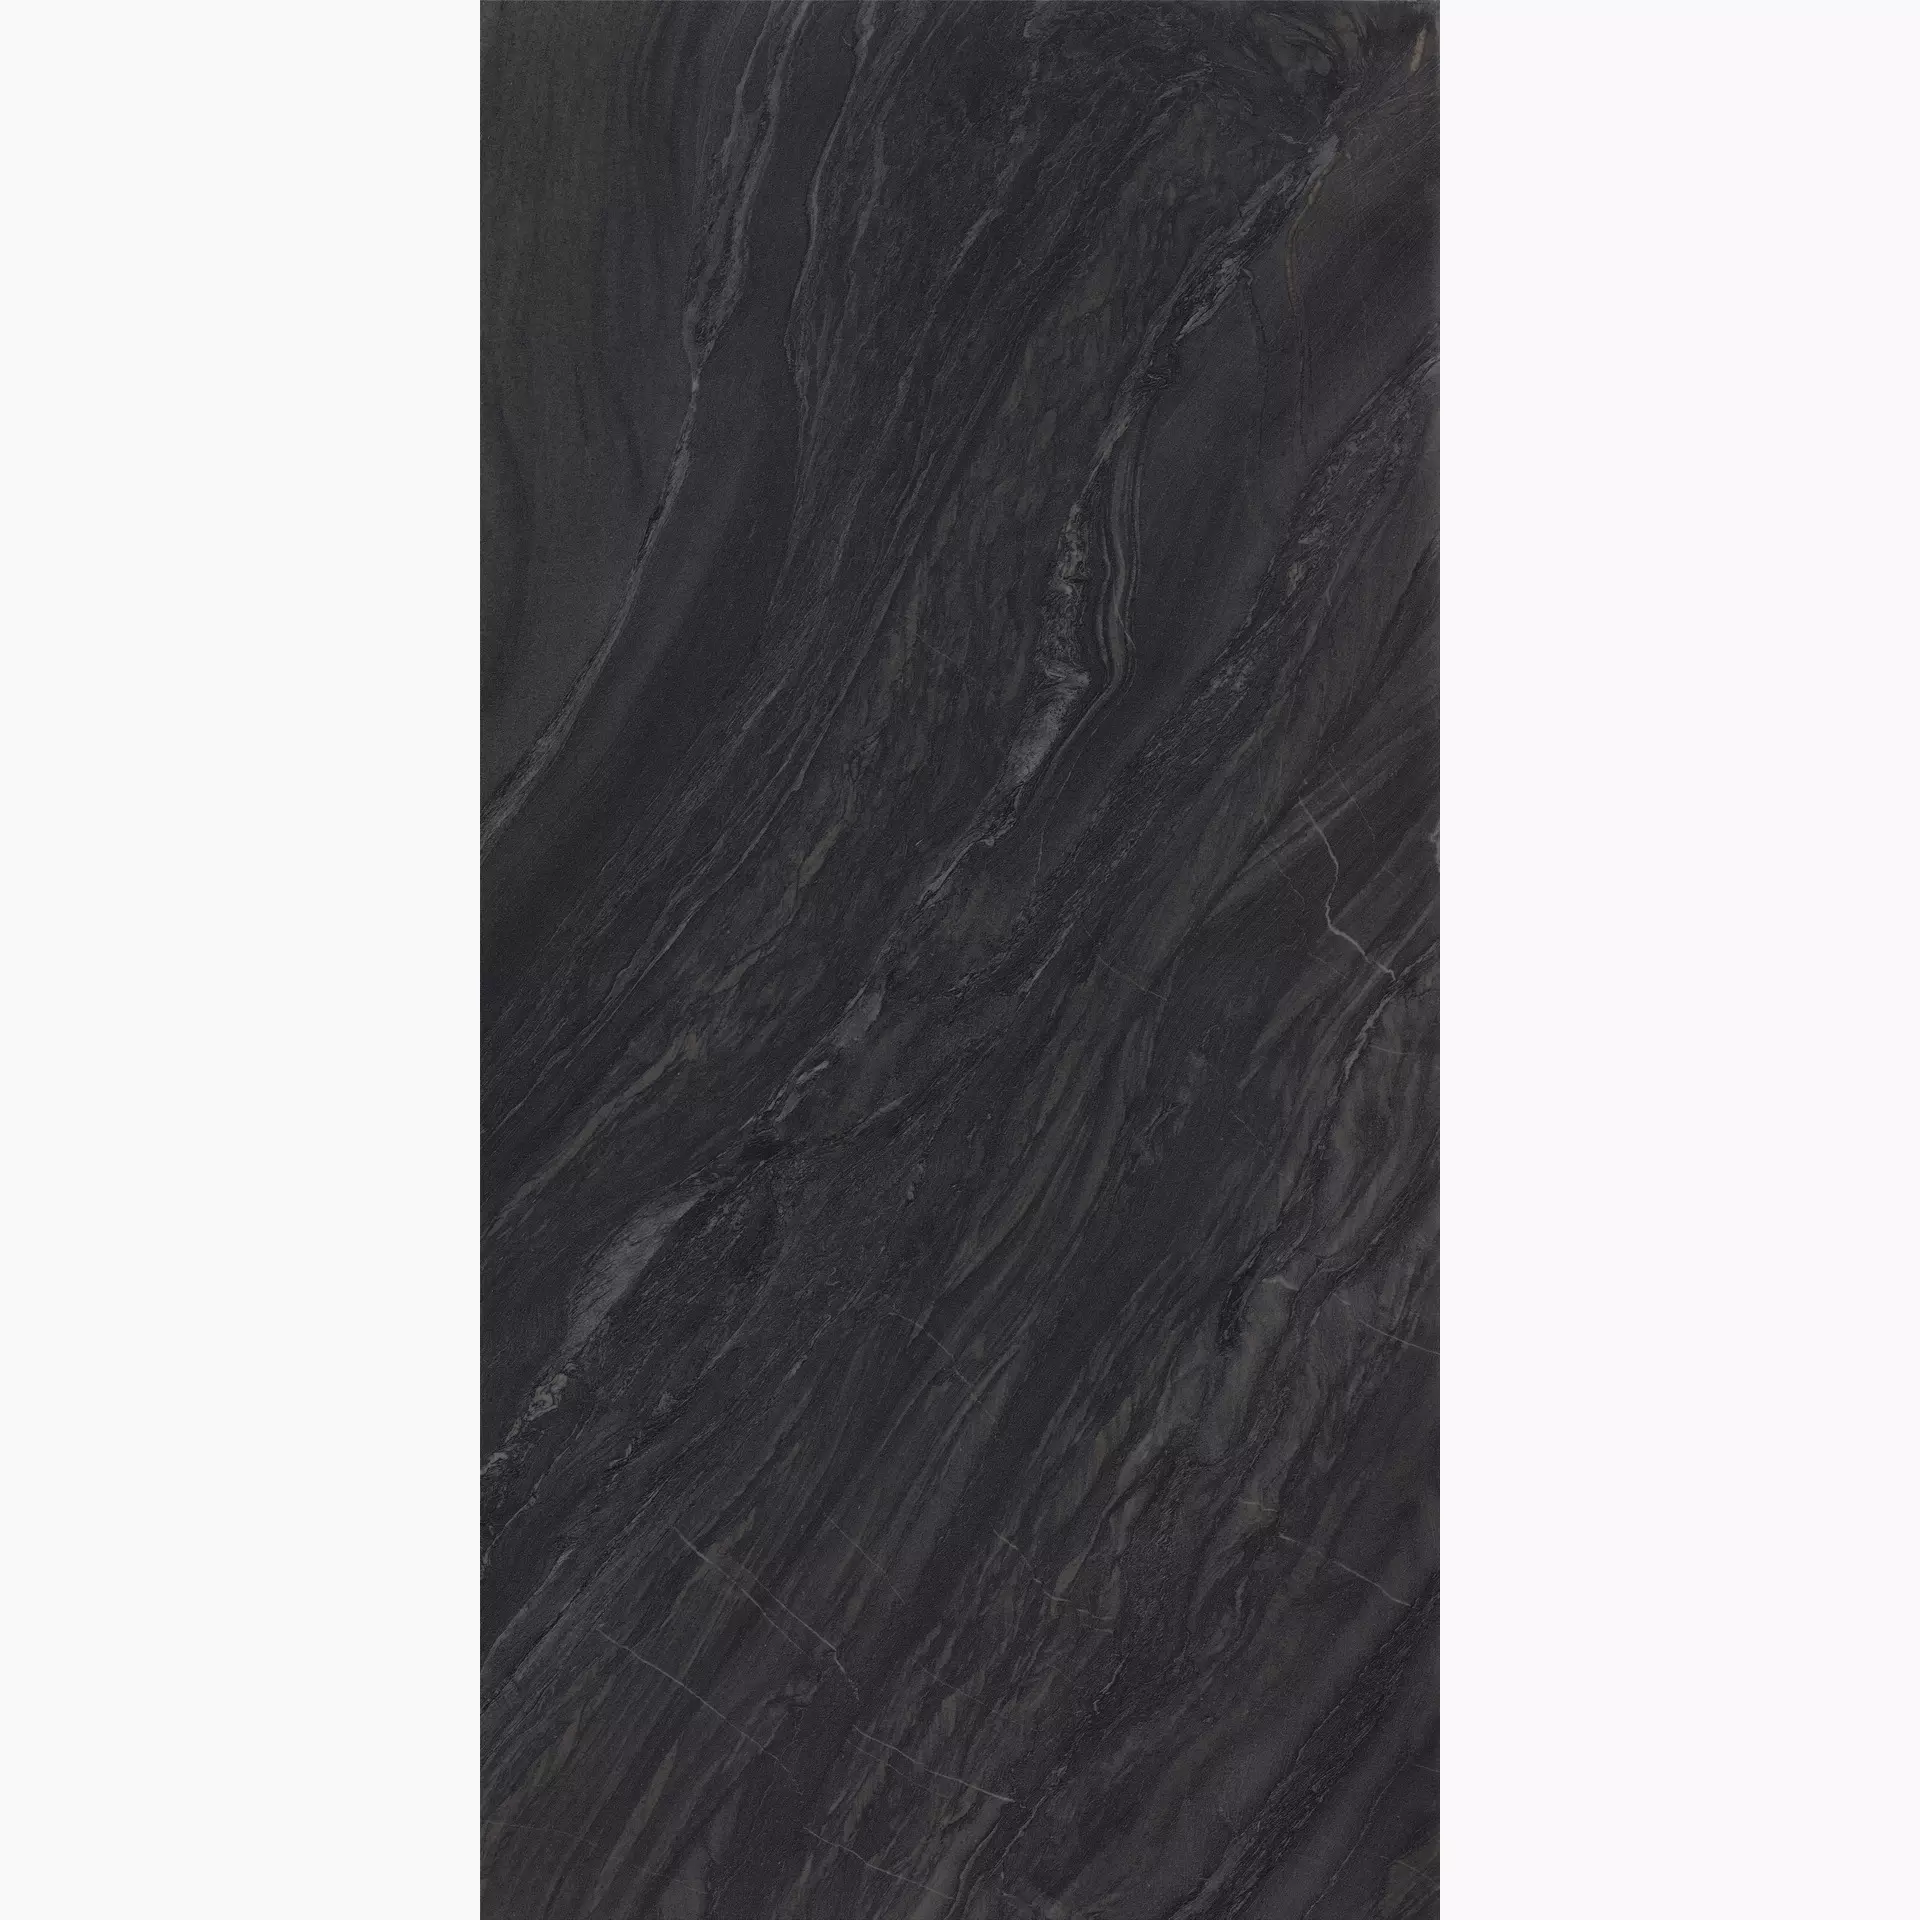 Marazzi Grande Stone Look Bahia Black Satin Stuoiato MNHU 160x320cm rectified 6mm